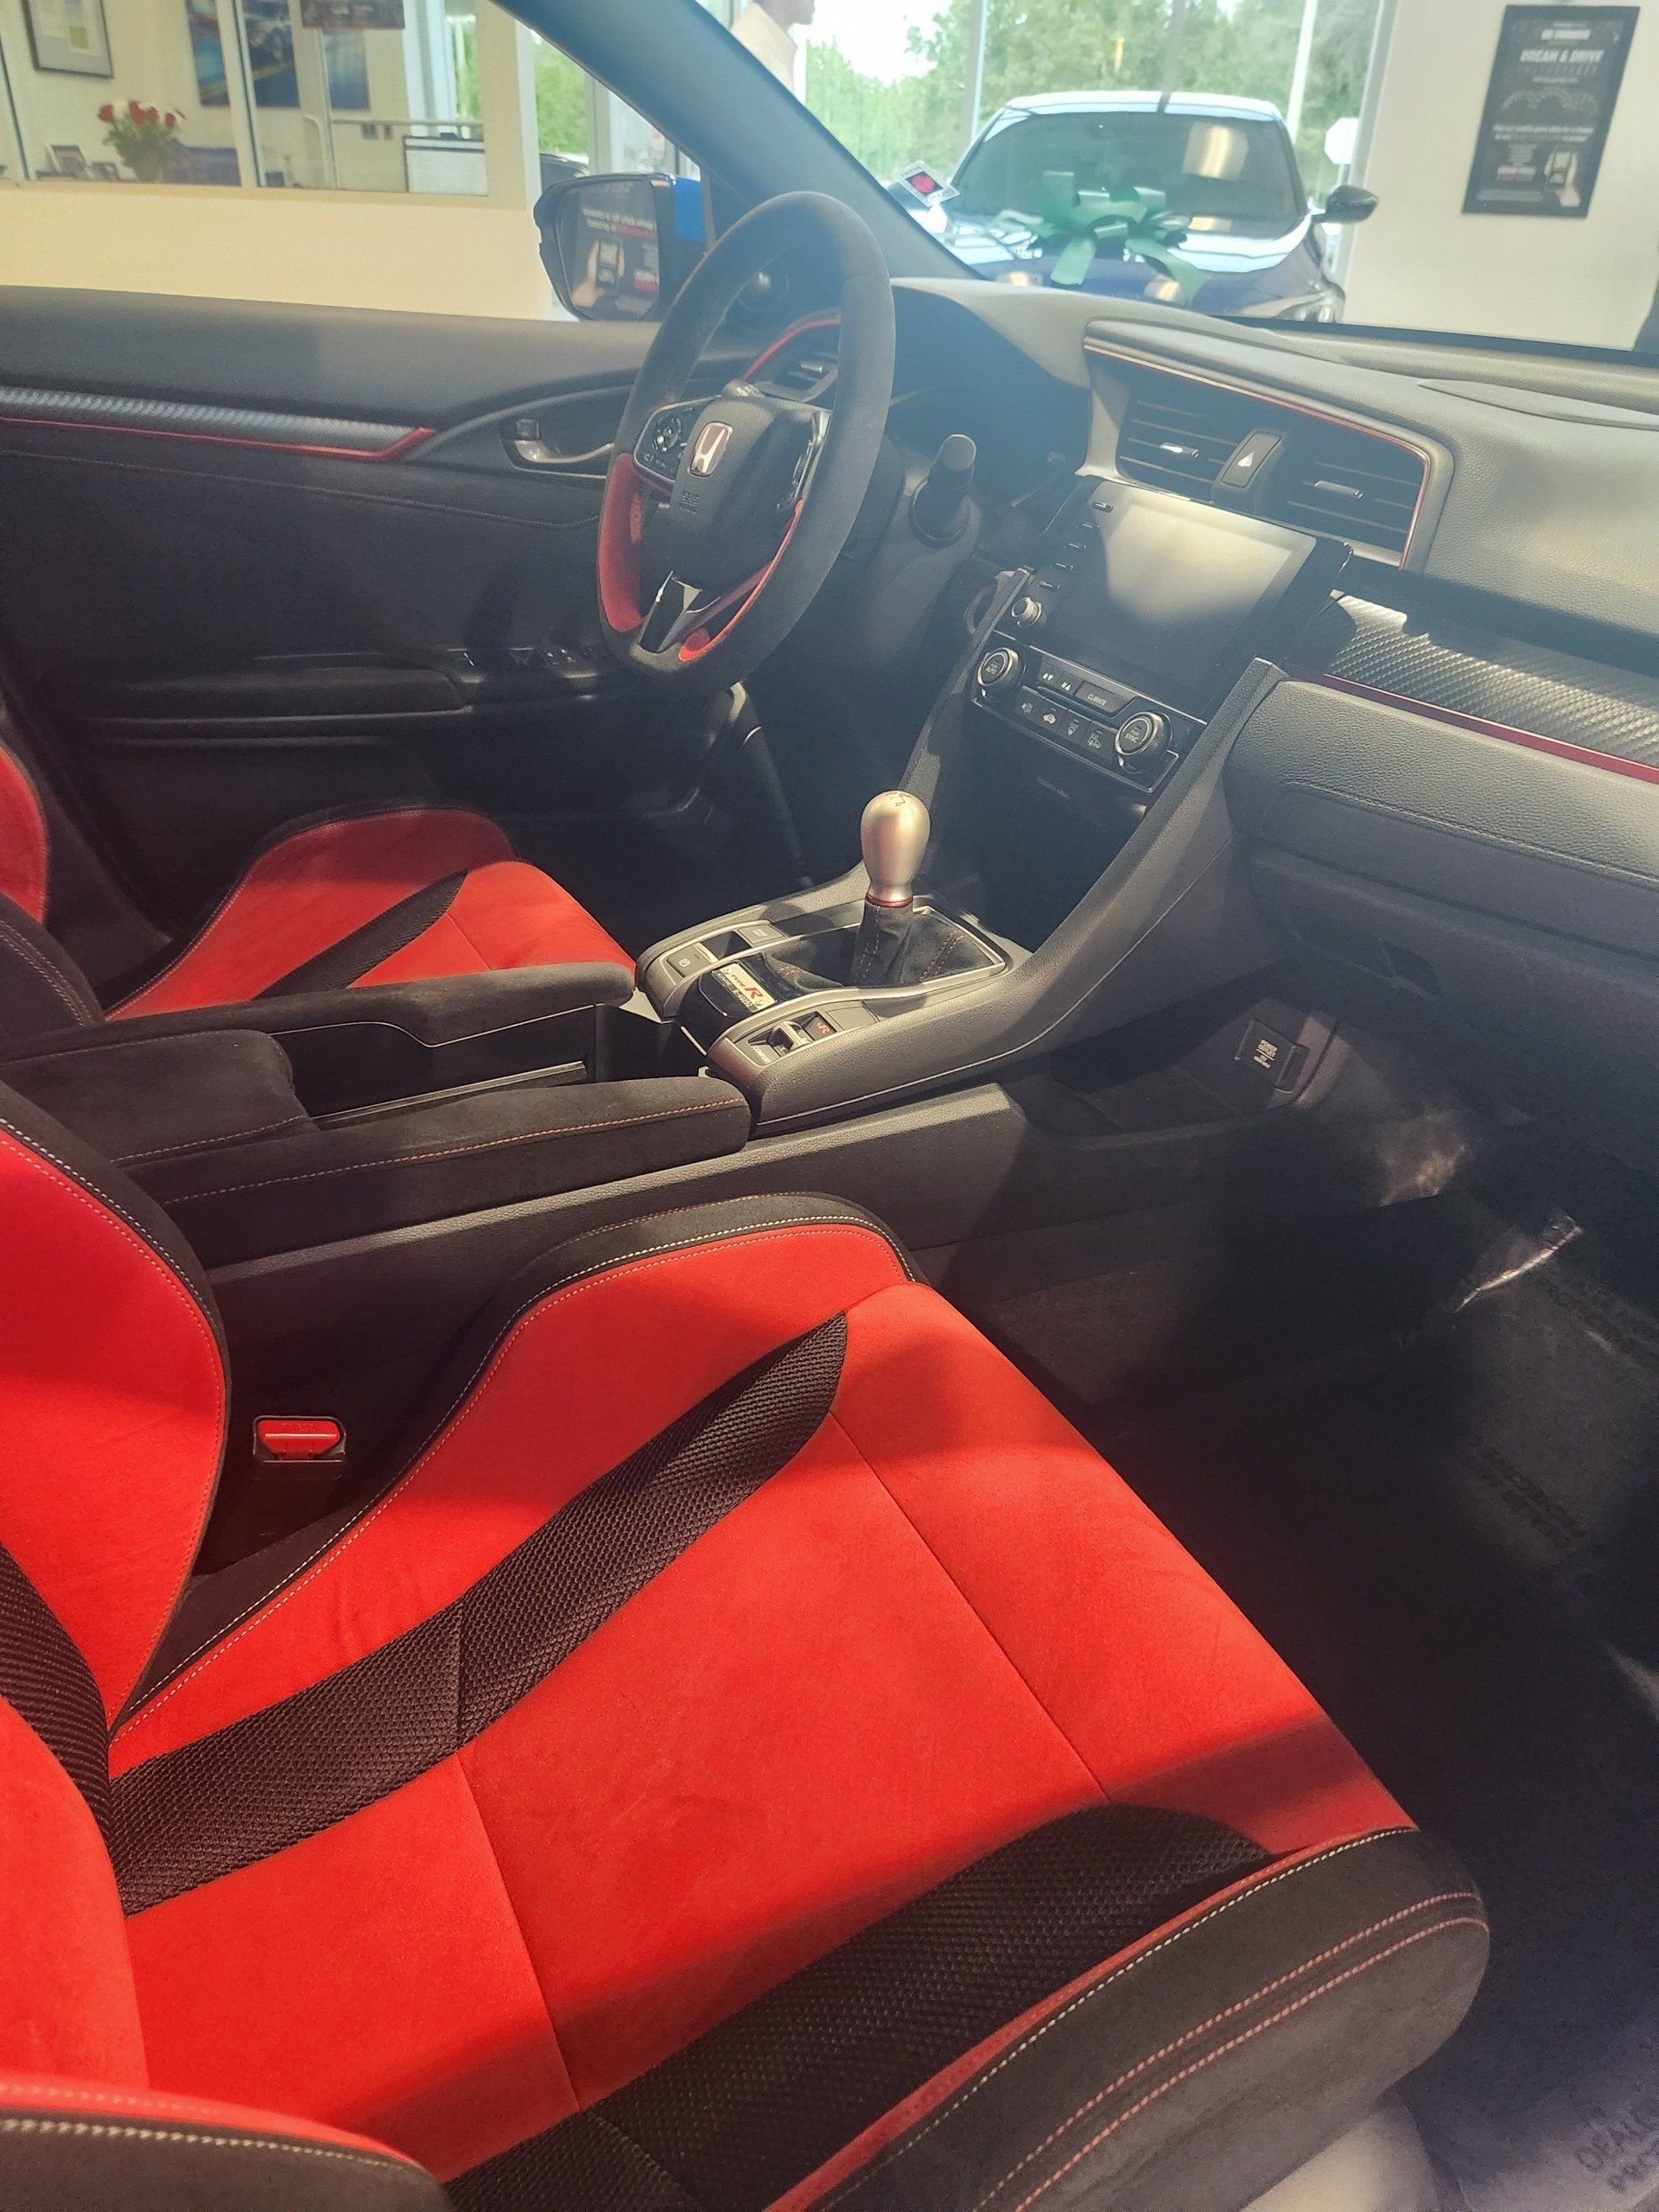 Honda Civic Red Leather Seat - Opa-locka, FL - Terr Auto World